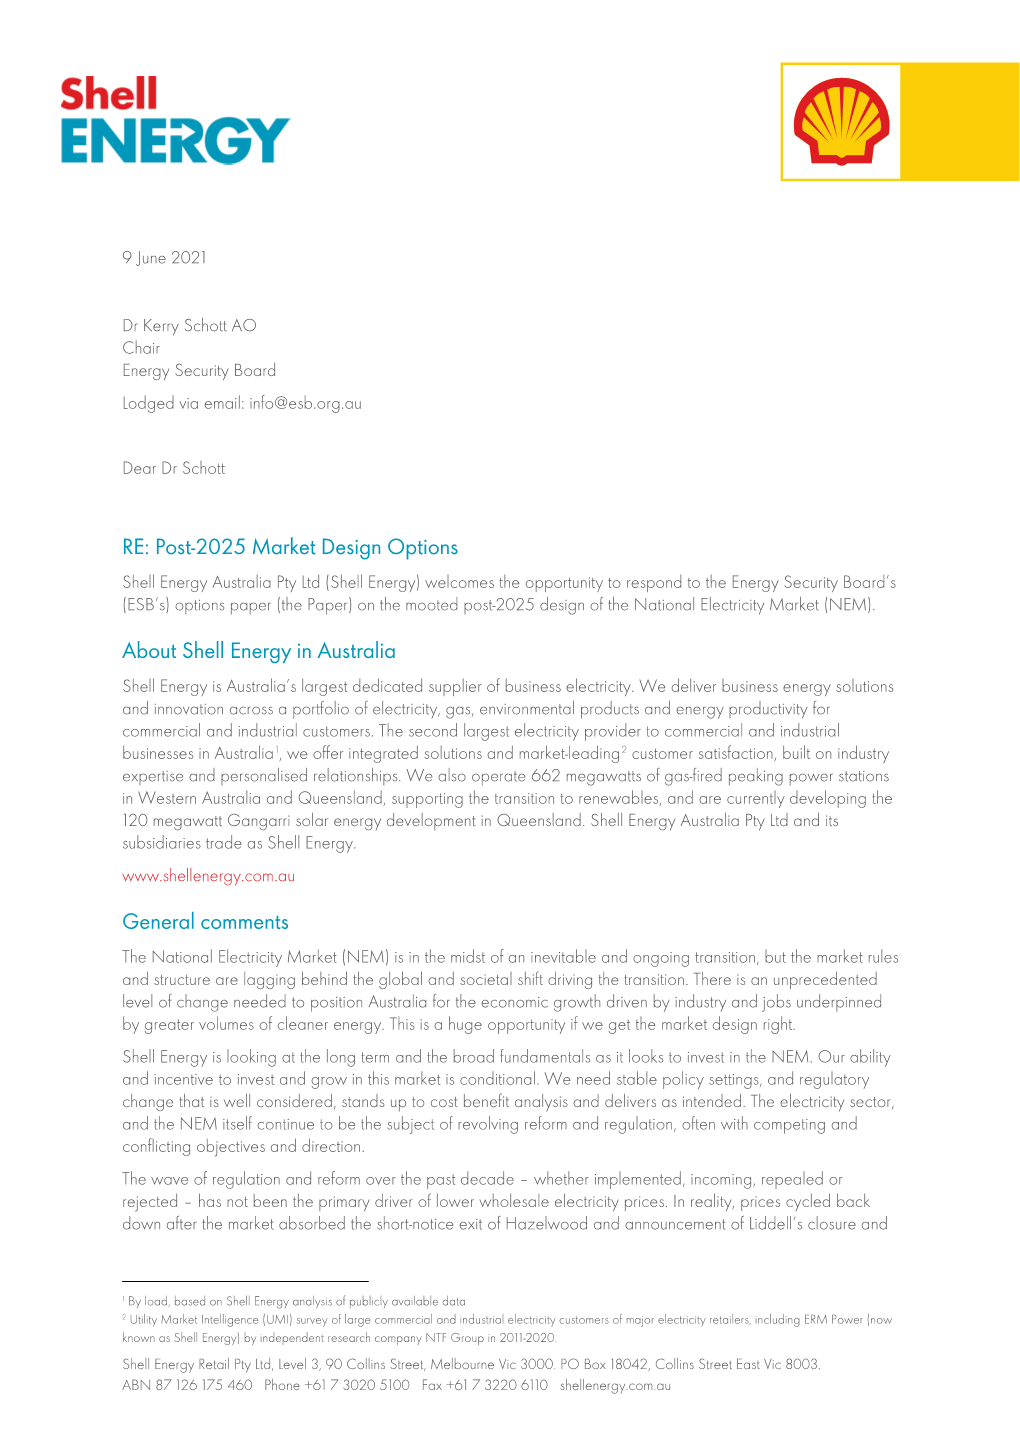 Shell Energy Response to P2025 Market Design Consultation Paper